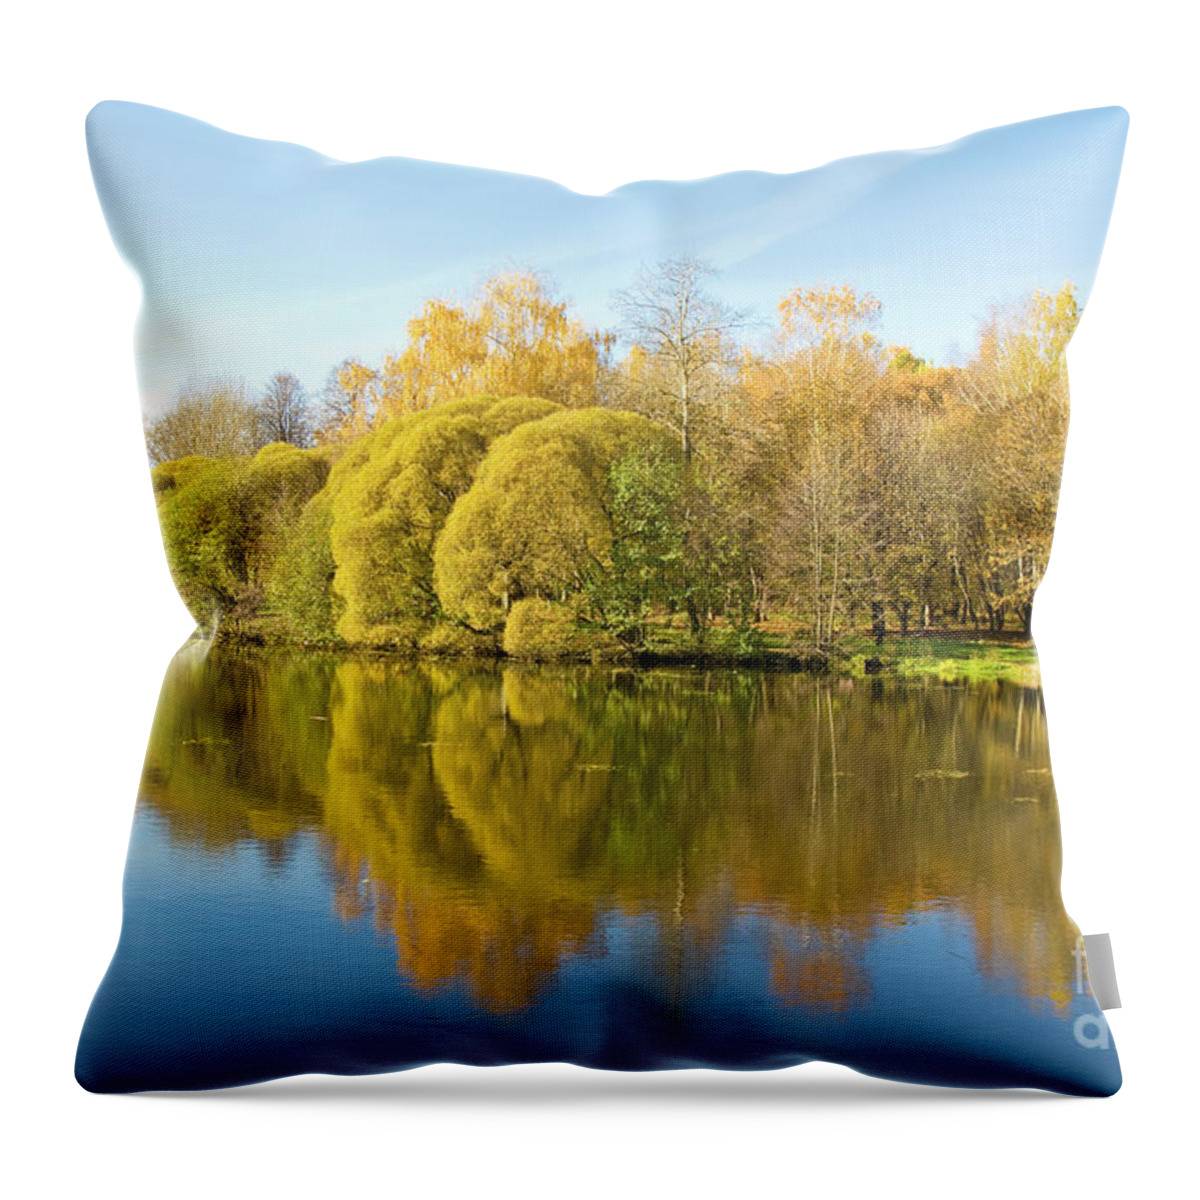 Autumn Throw Pillow featuring the photograph Autumn lake by Irina Afonskaya